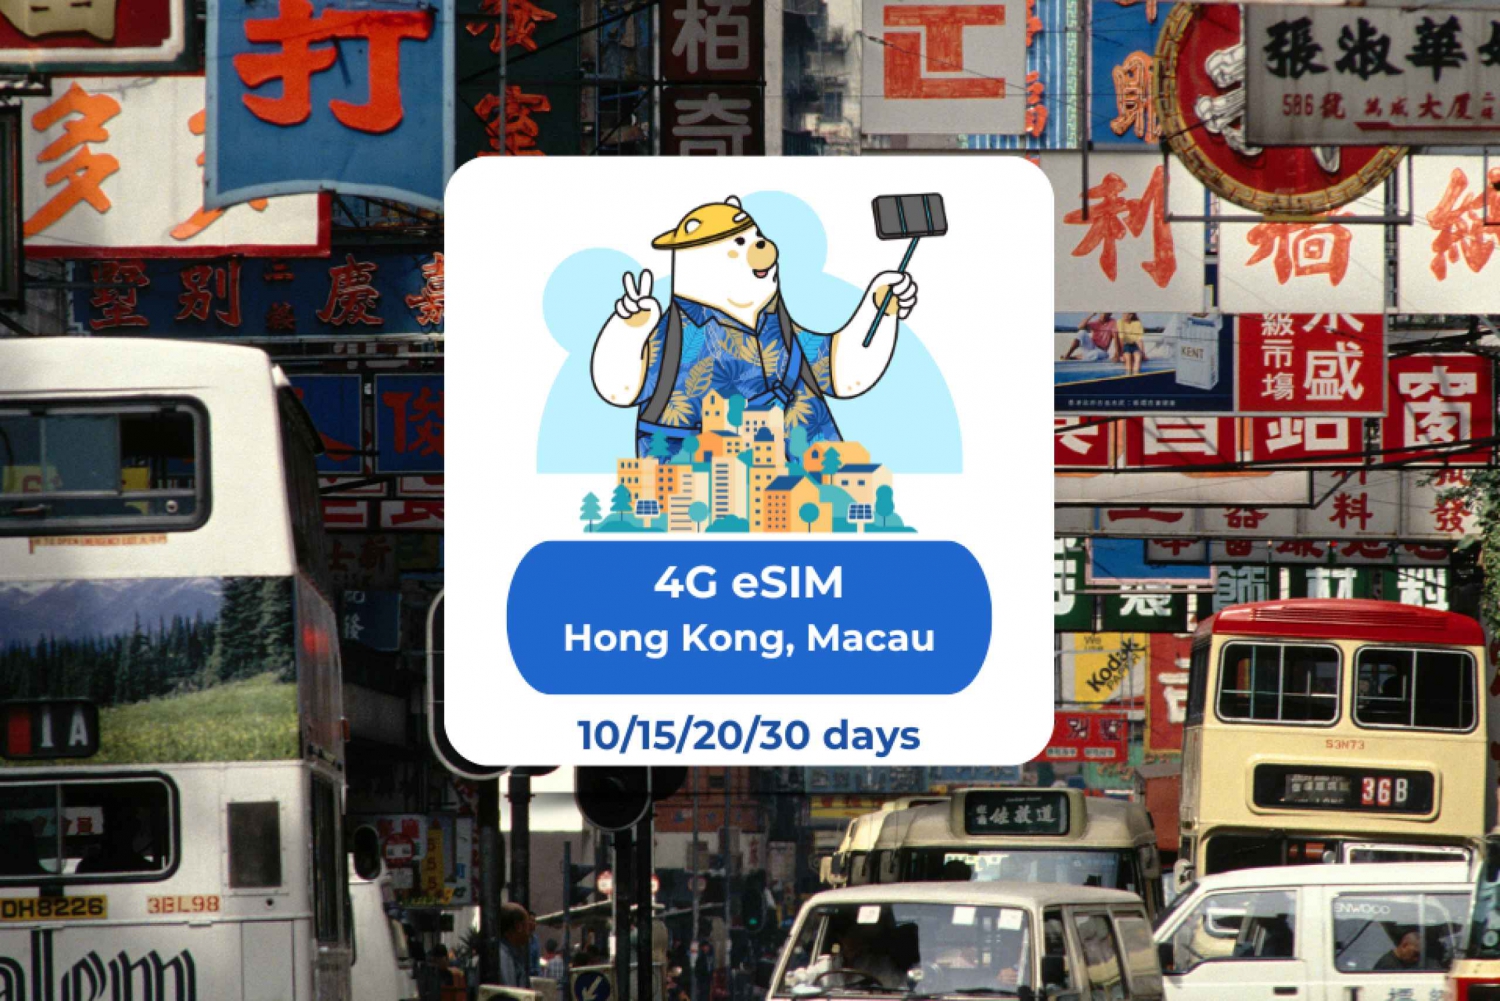 Hongkong - Macau: Esim-Datenpakete für 10/15/20/30 Tage